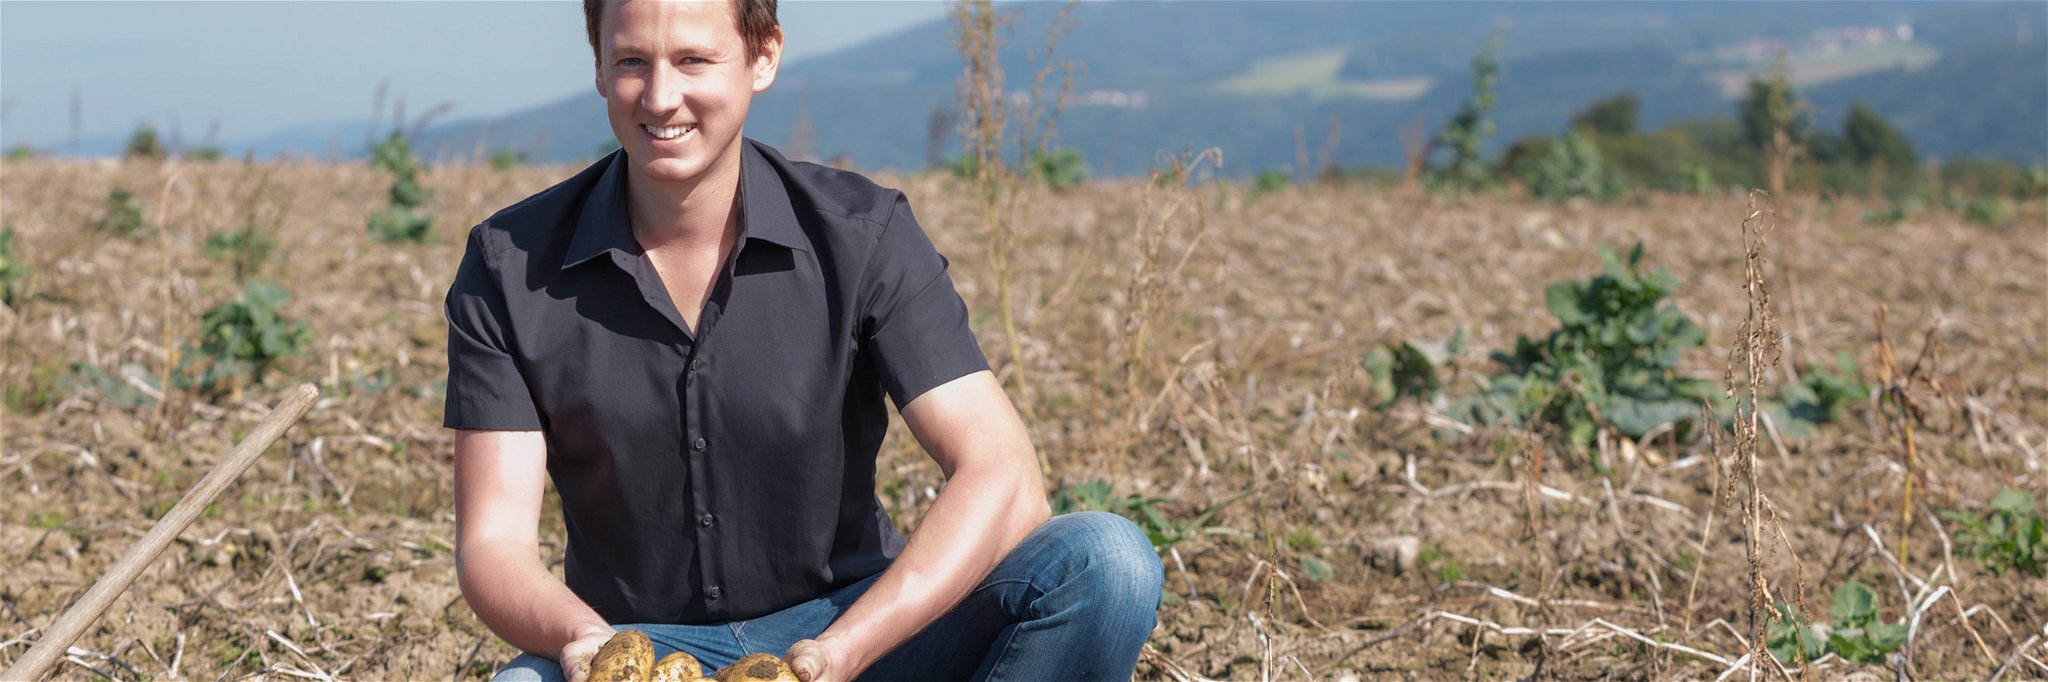 1200 Tonnen Erdäpfel produziert Martin Paminger und neun weitere Sauwald-Landwirte.